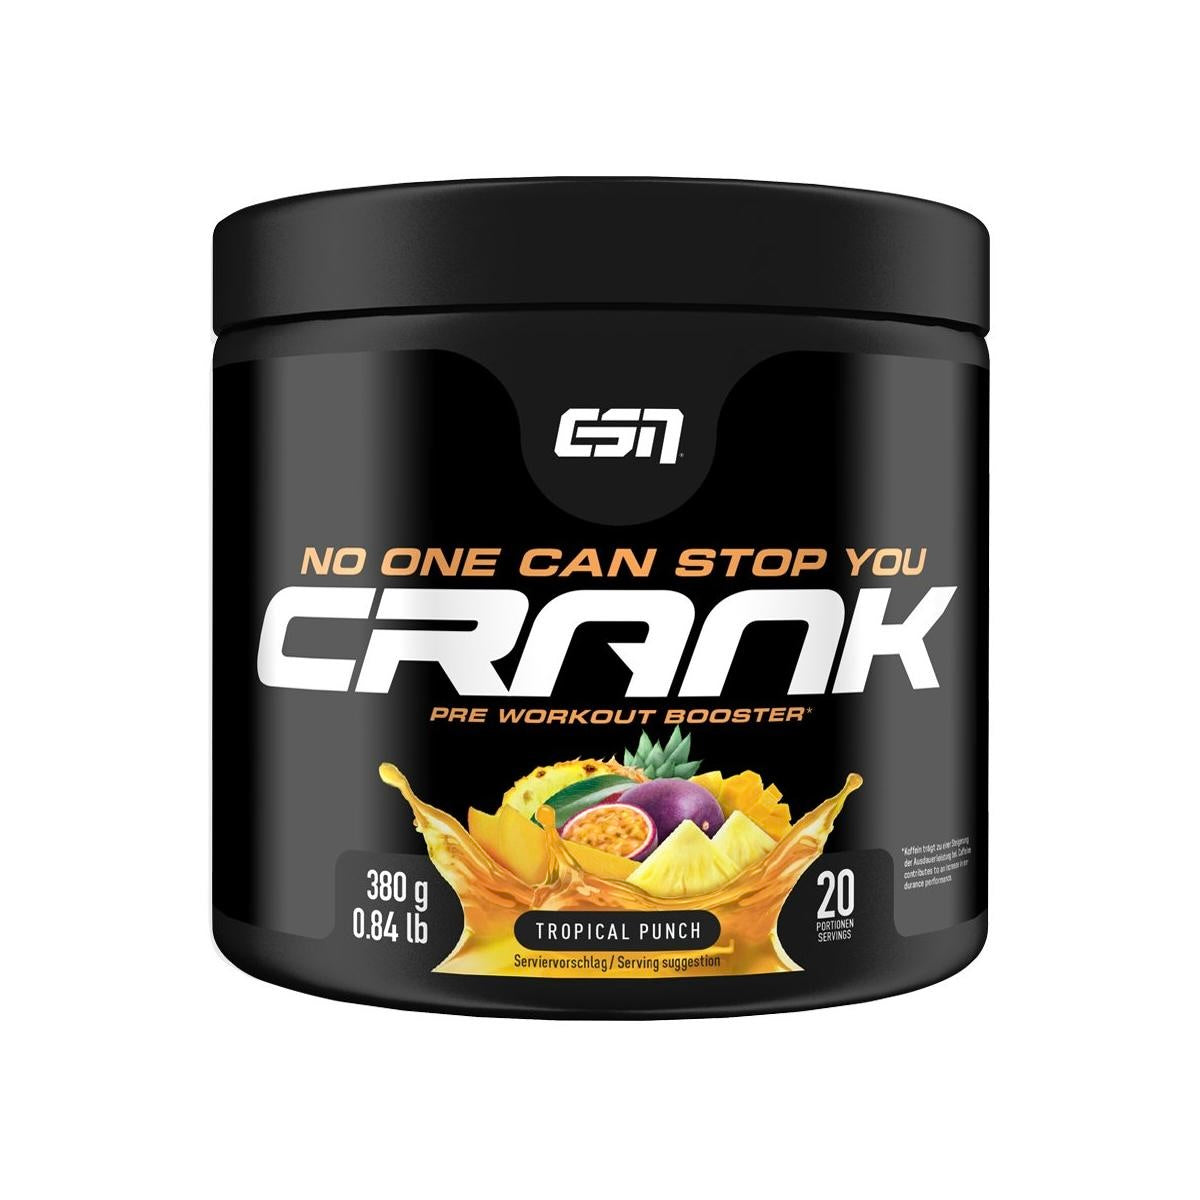 ESN Crank Pre Workout Booster - 380g NUTRITION BASE